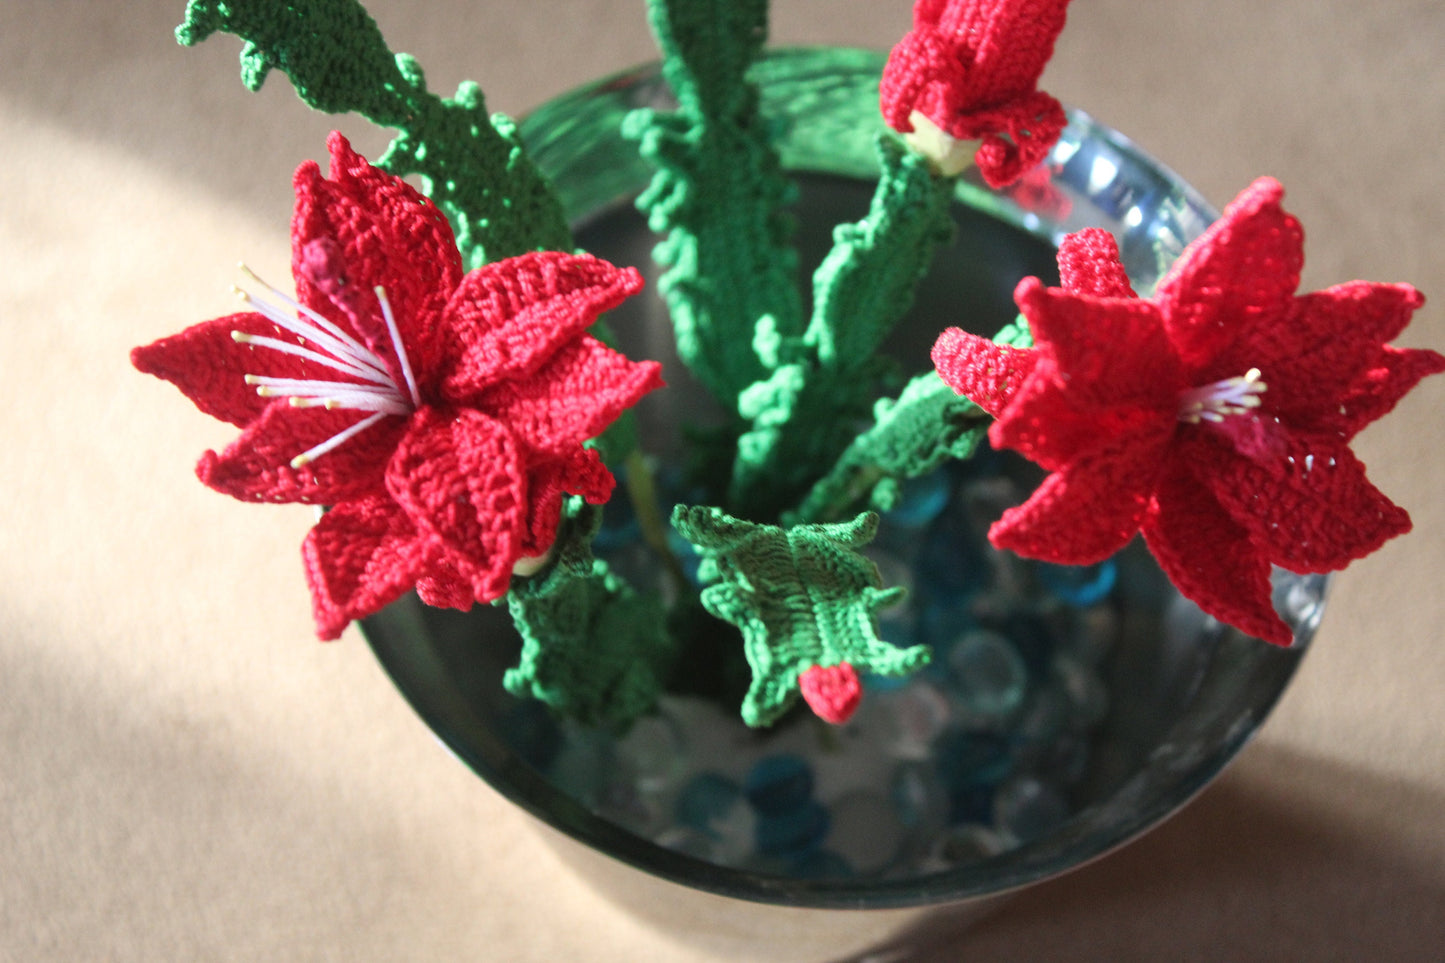 Crochet Christmas Cactus